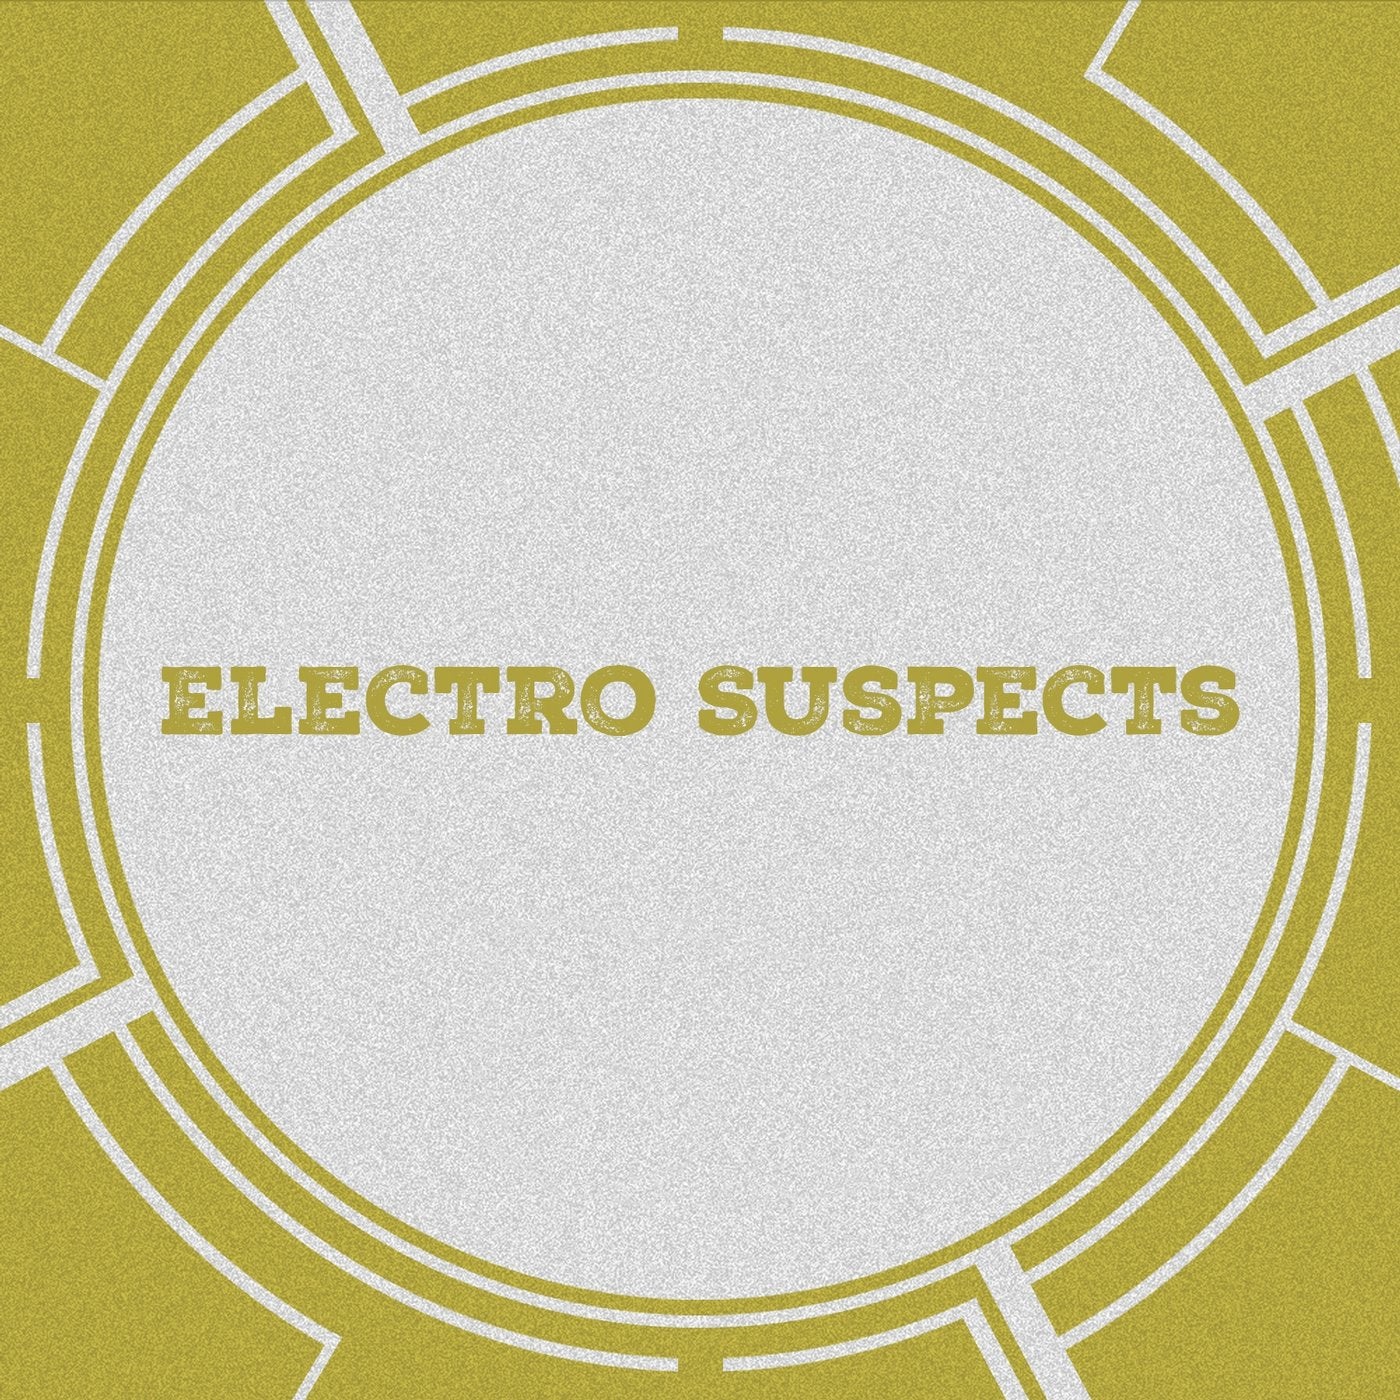 Electro Suspects